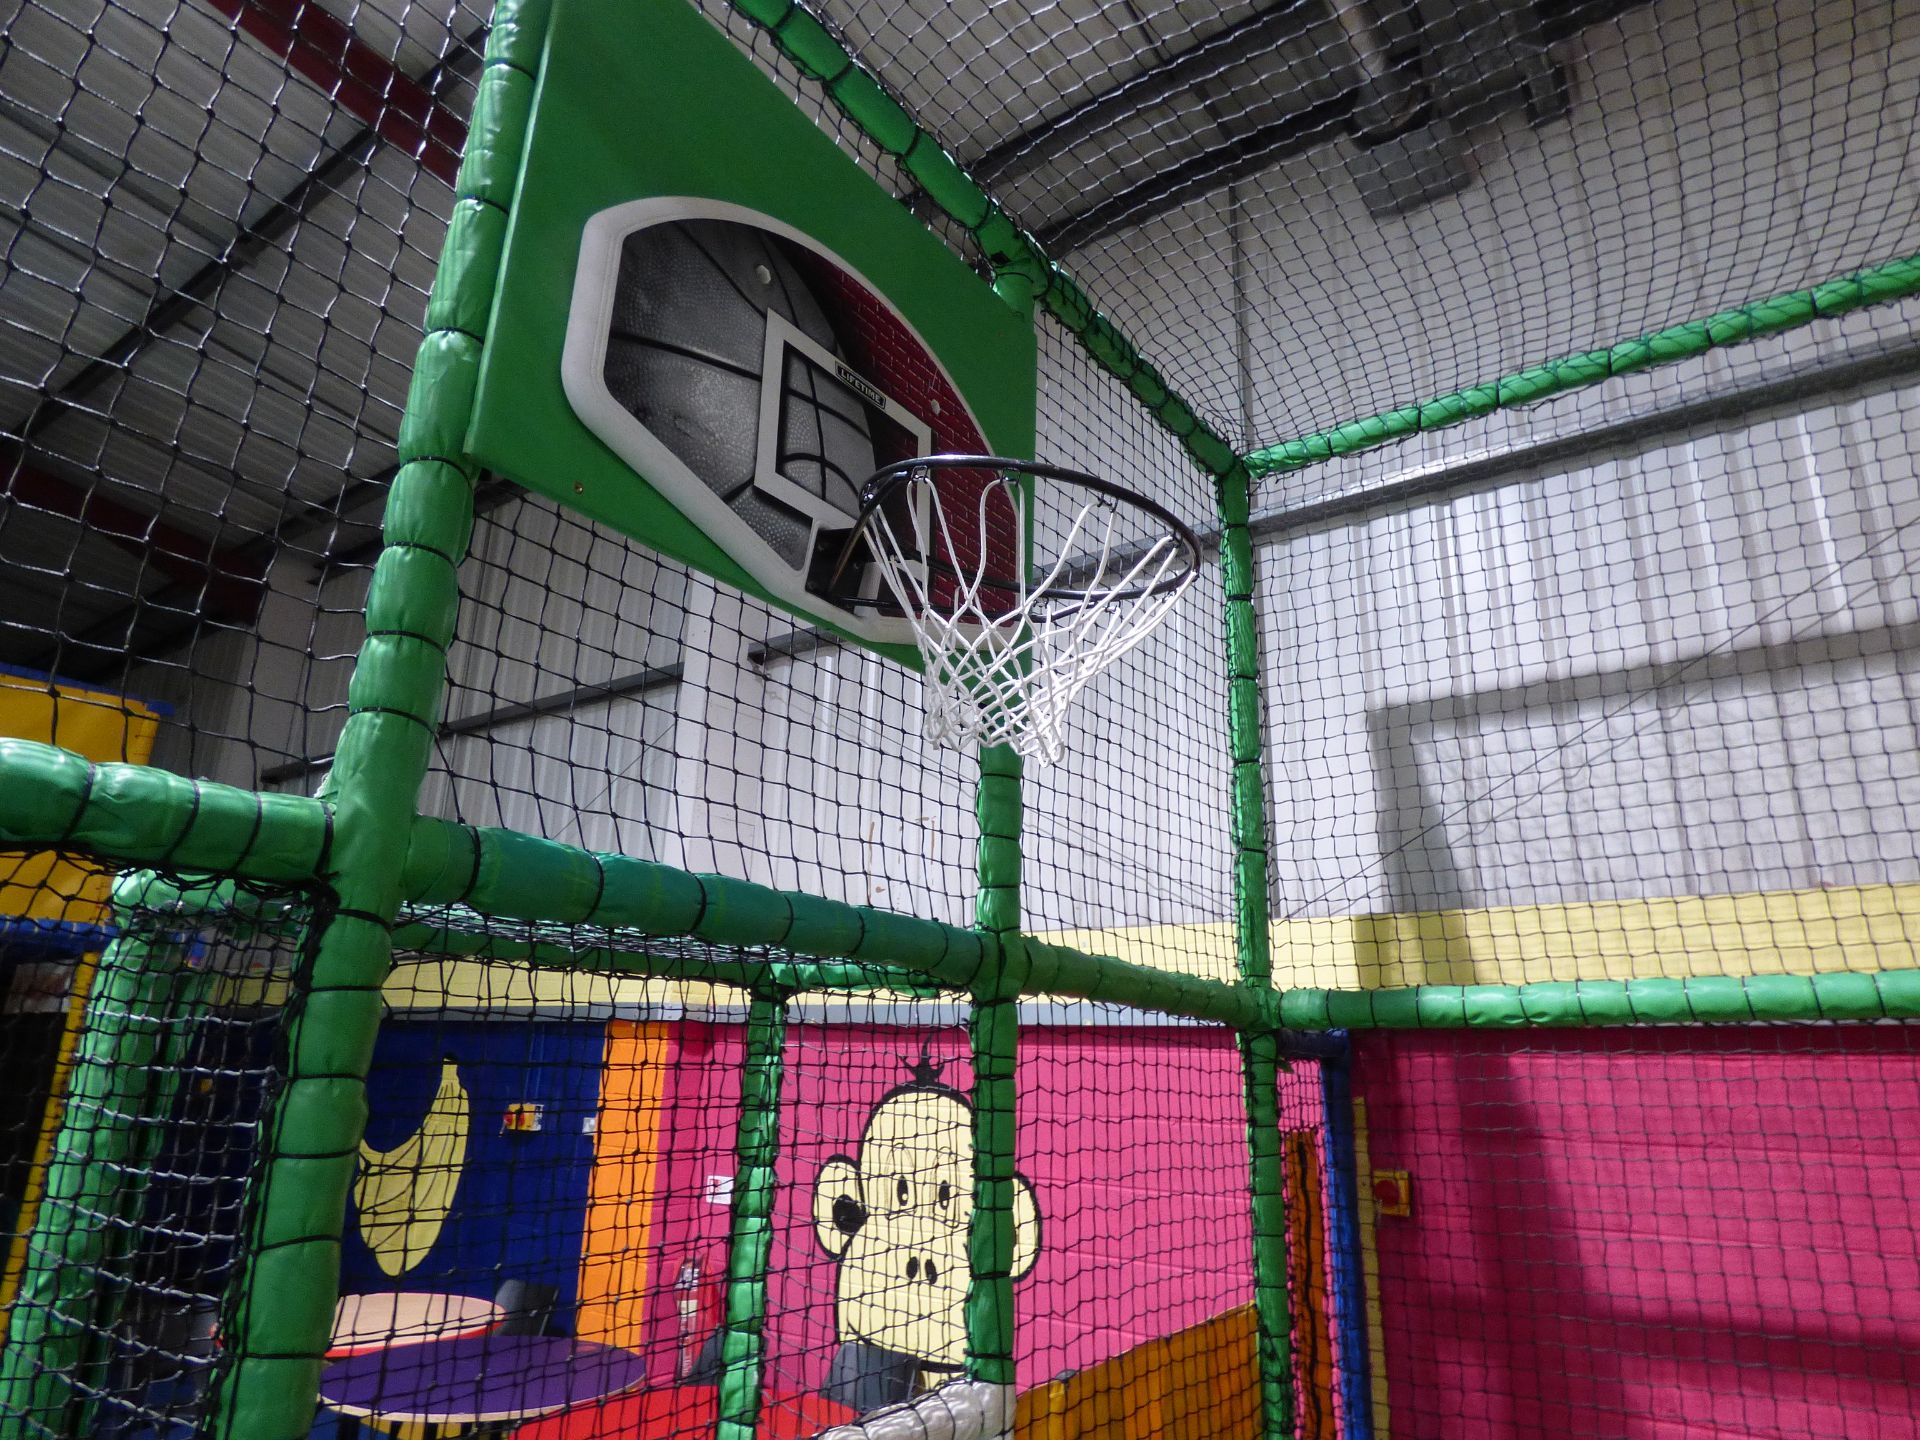 Football/Netball (Basketball) Court Area - Bild 8 aus 8